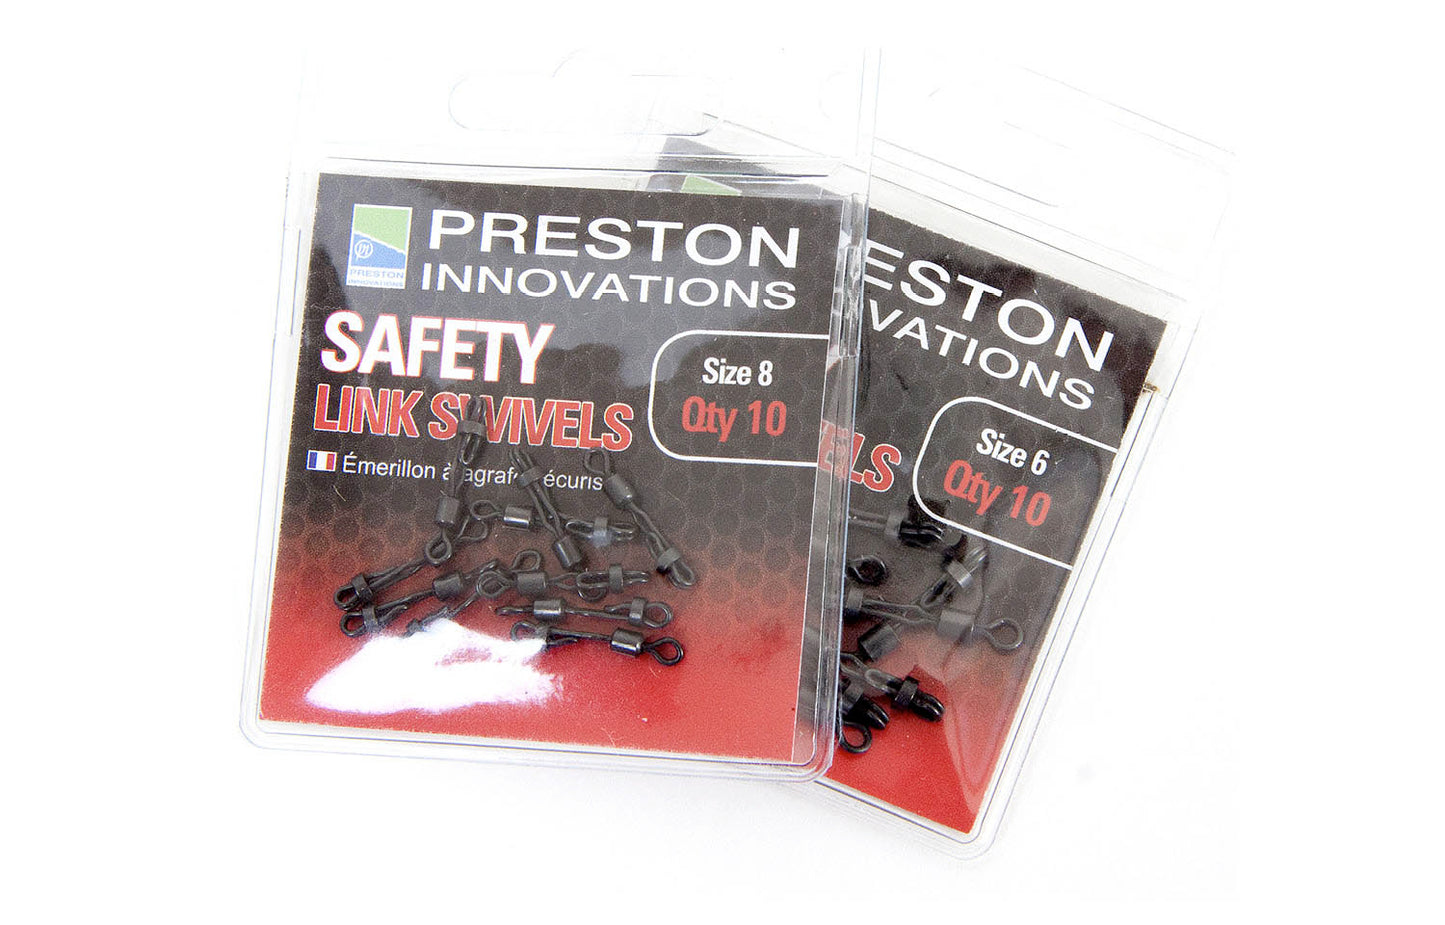 Preston Innovations Safety Link Swivels